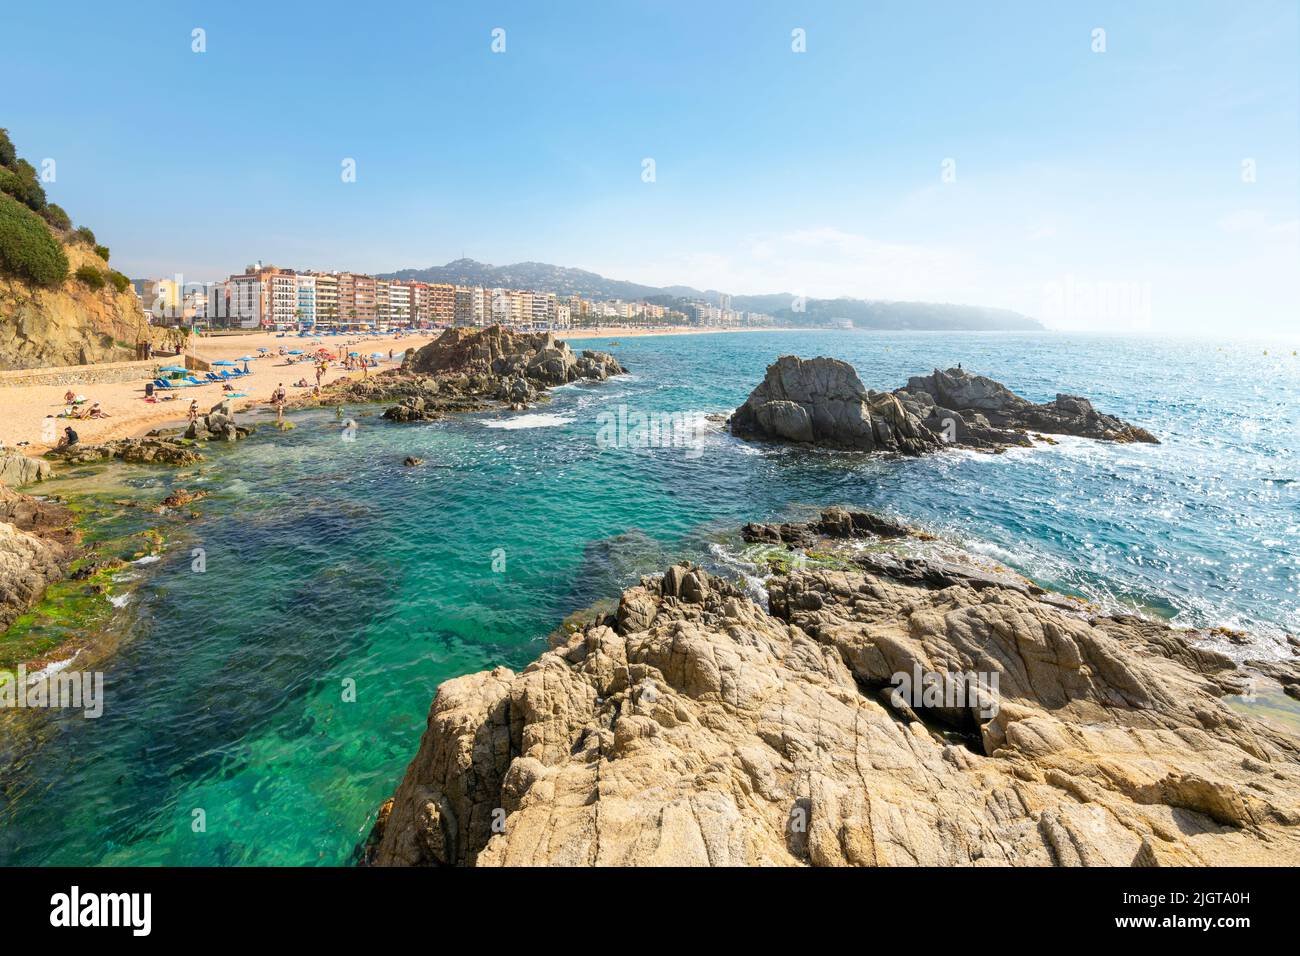 View of the sandy beach, rocky shoreline and resort town of Lloret de Mar, Spain, on the Costa Brava coast of the Mediterranean Sea. Stock Photo